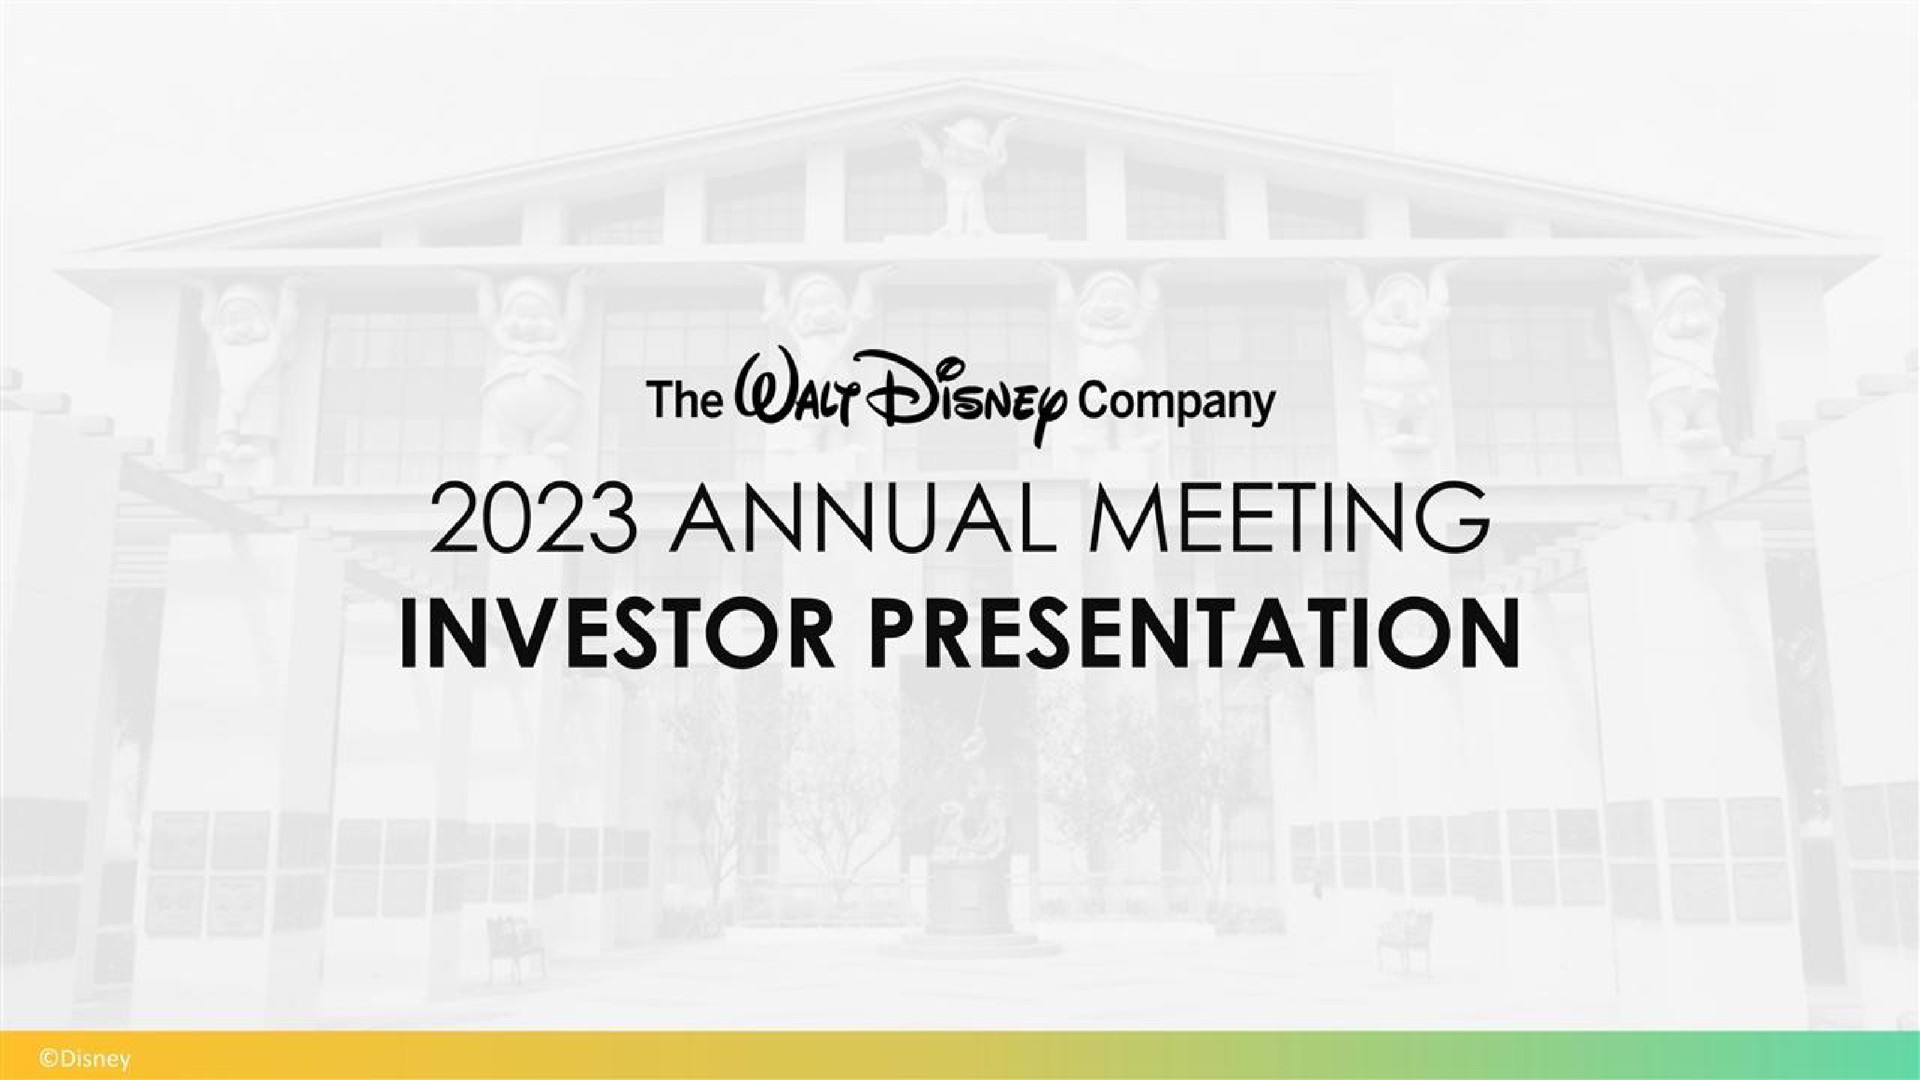 the oar company annual meeting investor presentation | Disney